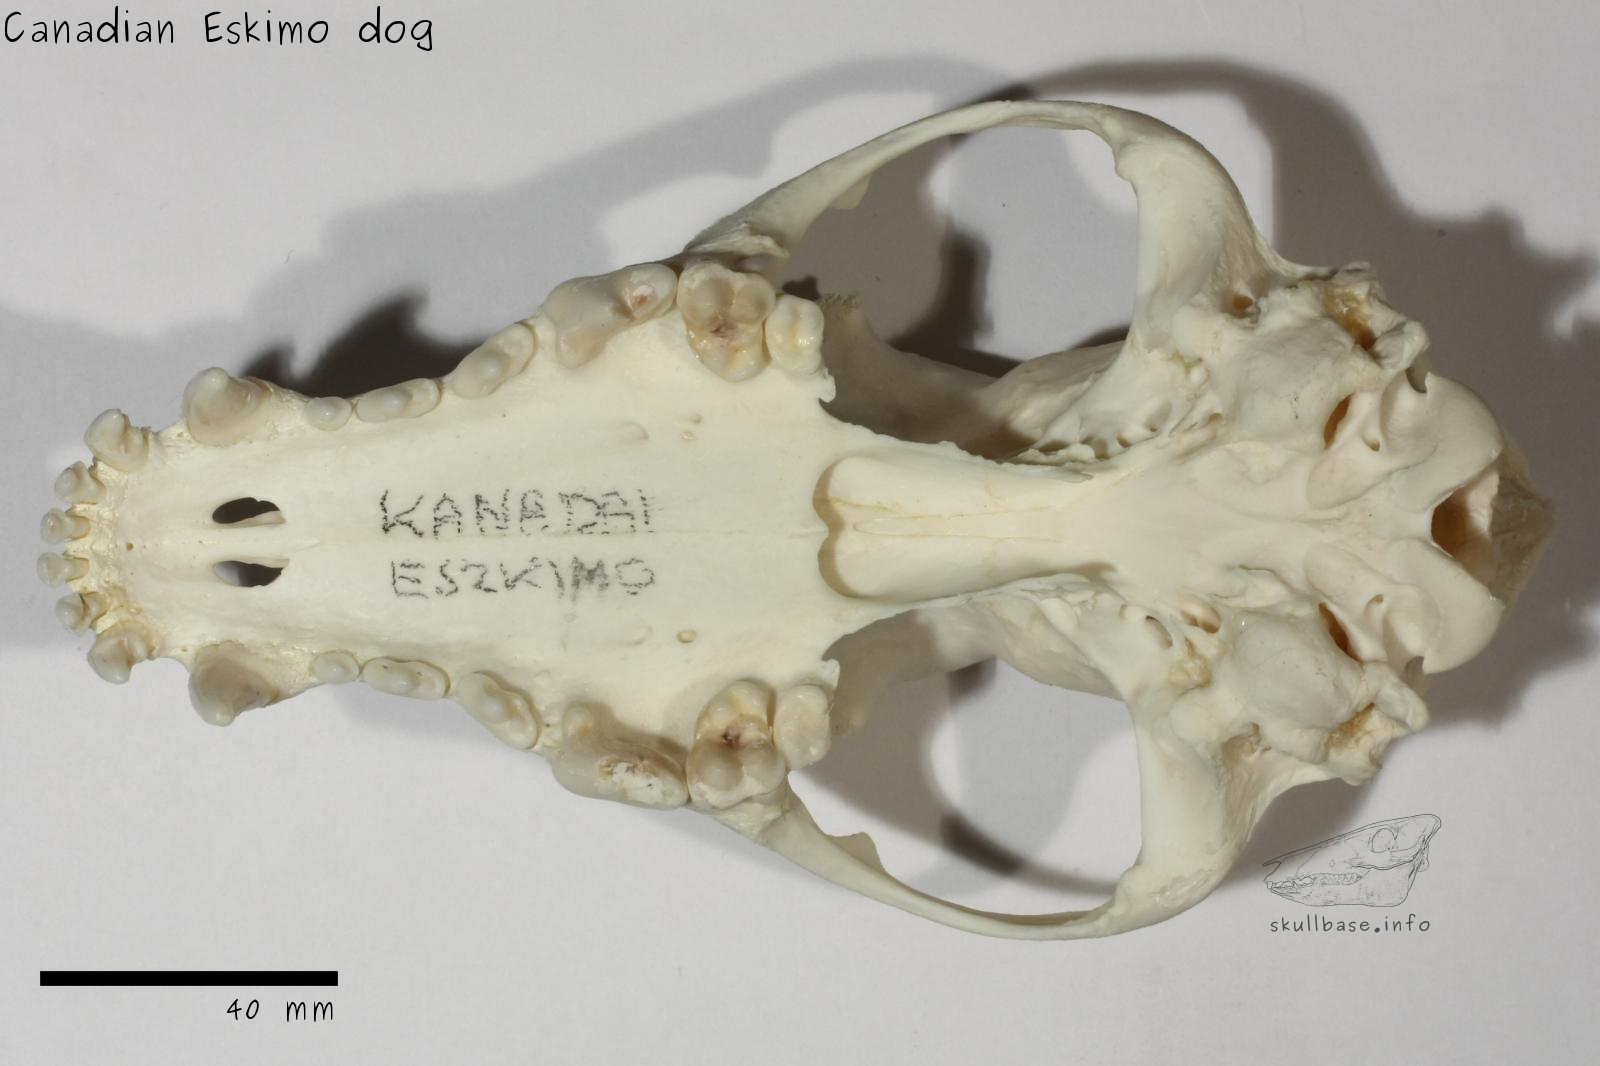 Canadian Eskimo dog (Canis lupus familiaris) skull ventral view